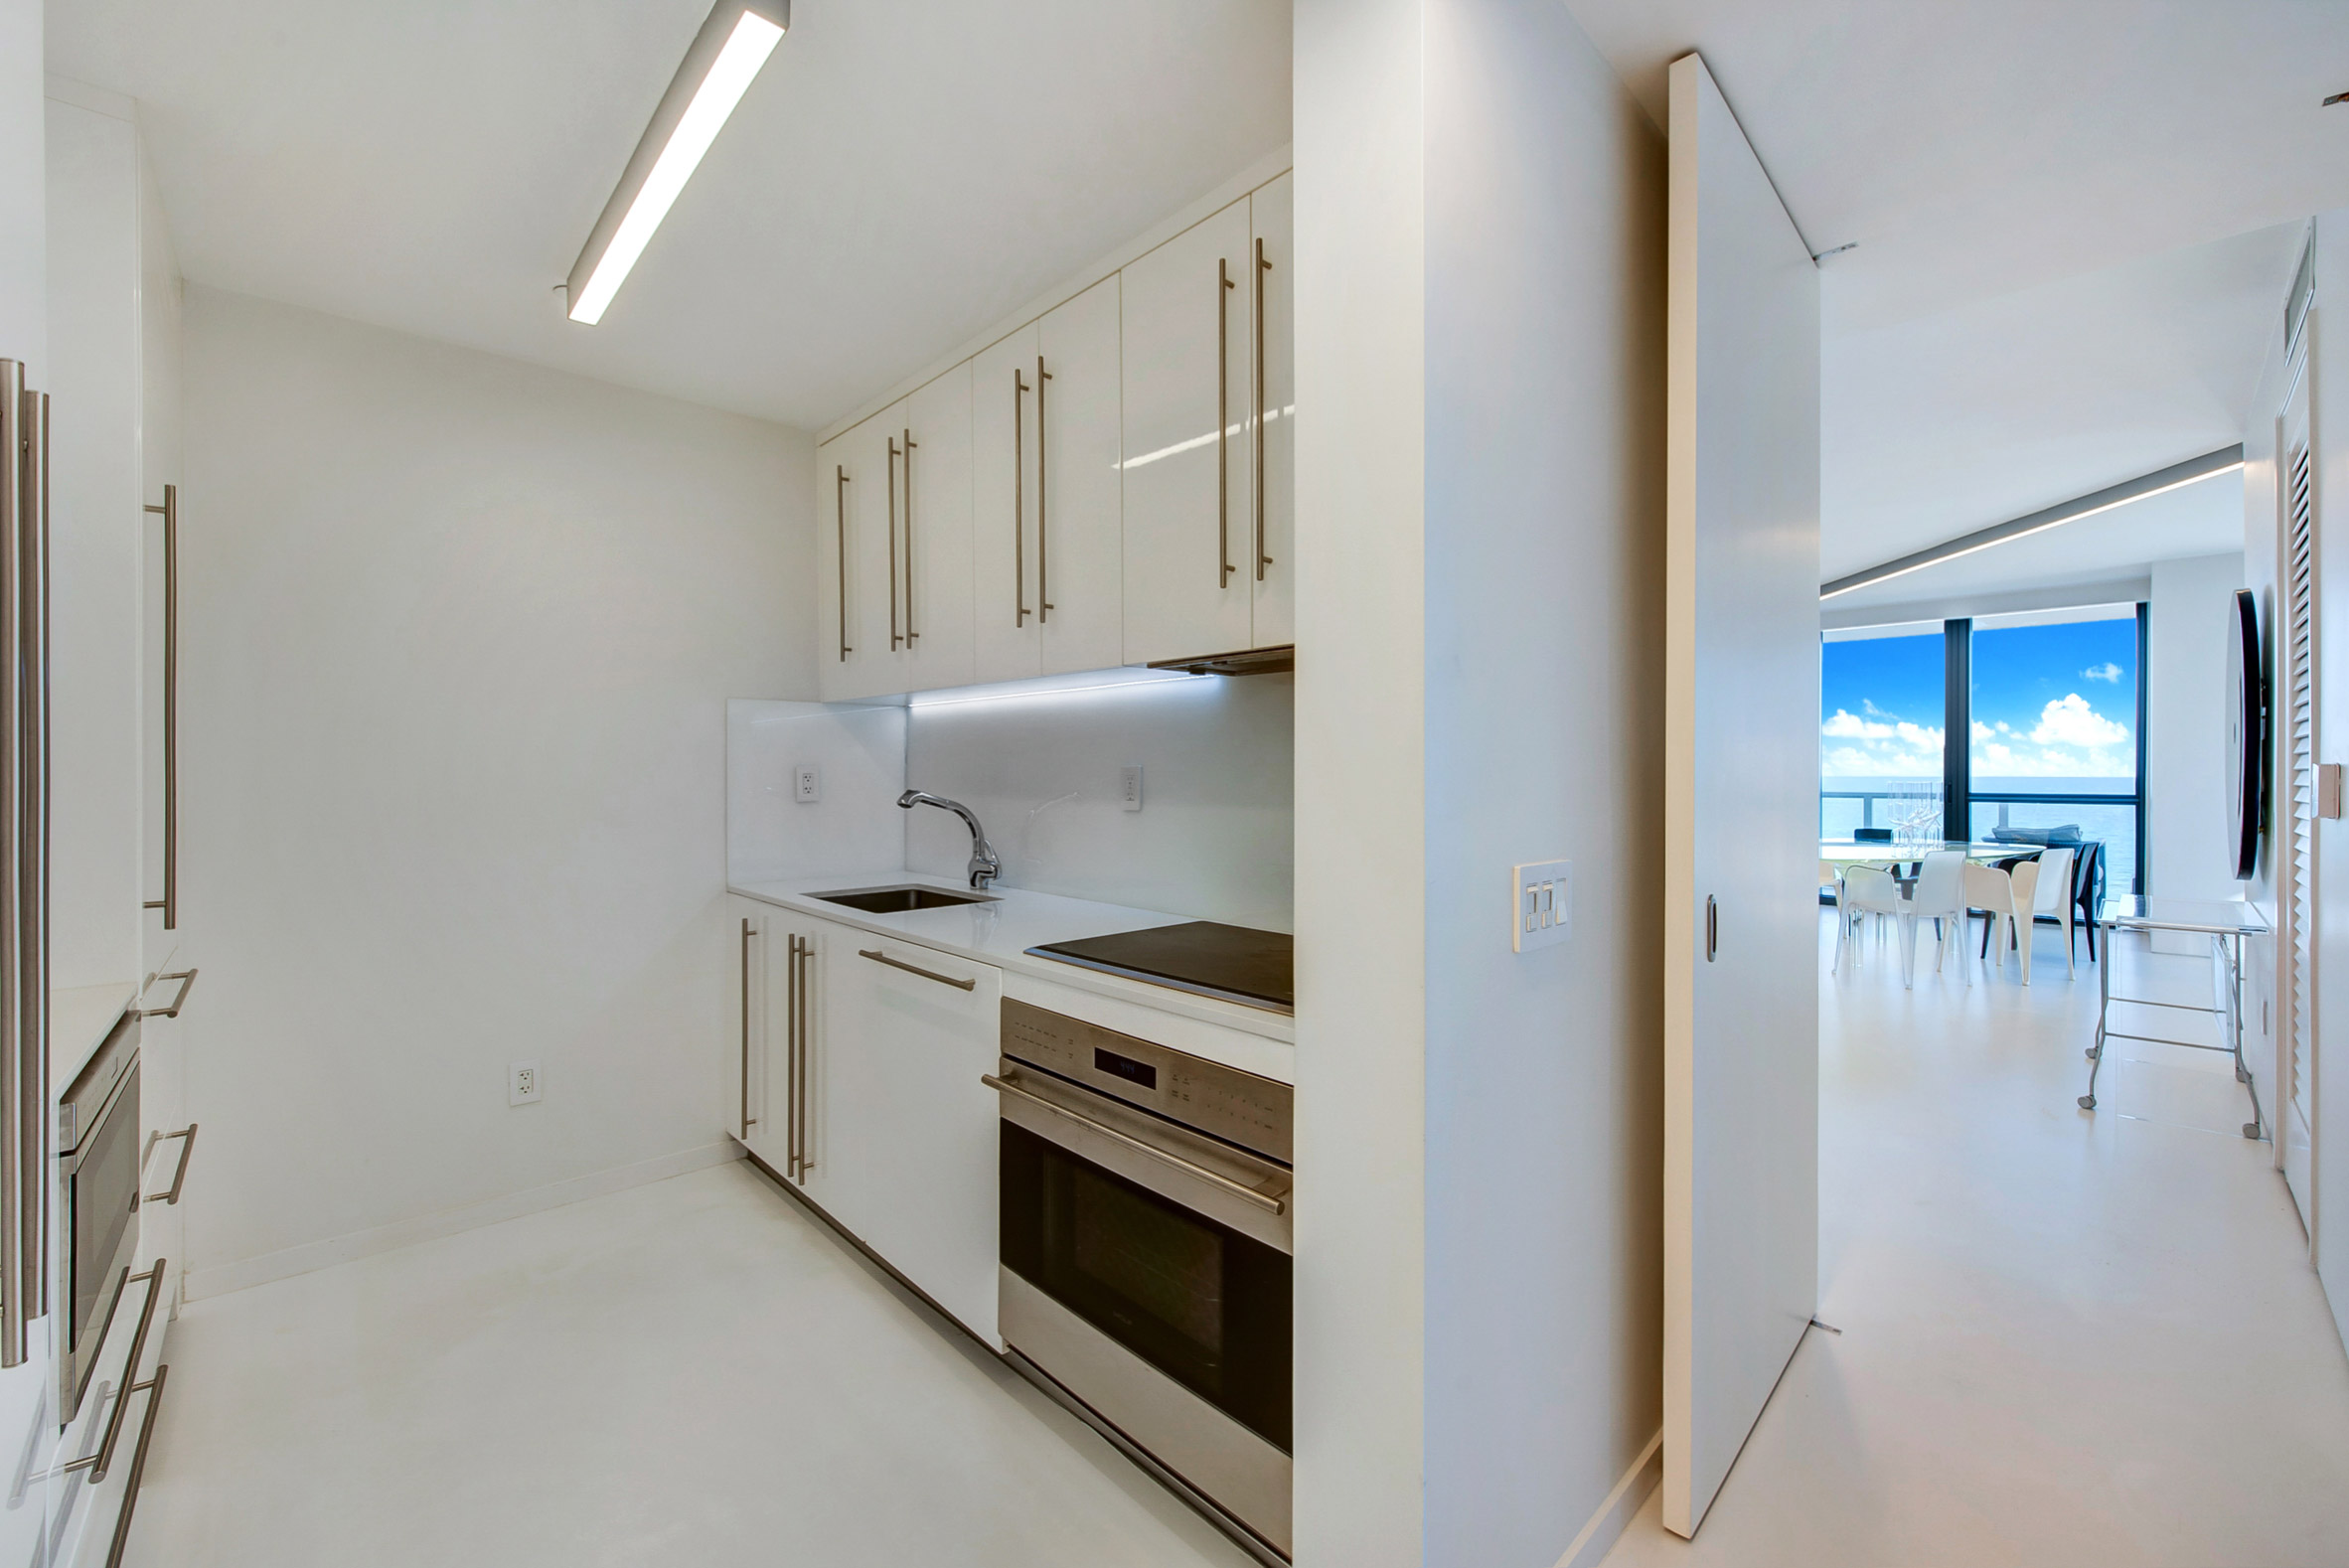 Zaha Hadid's Miami apartment